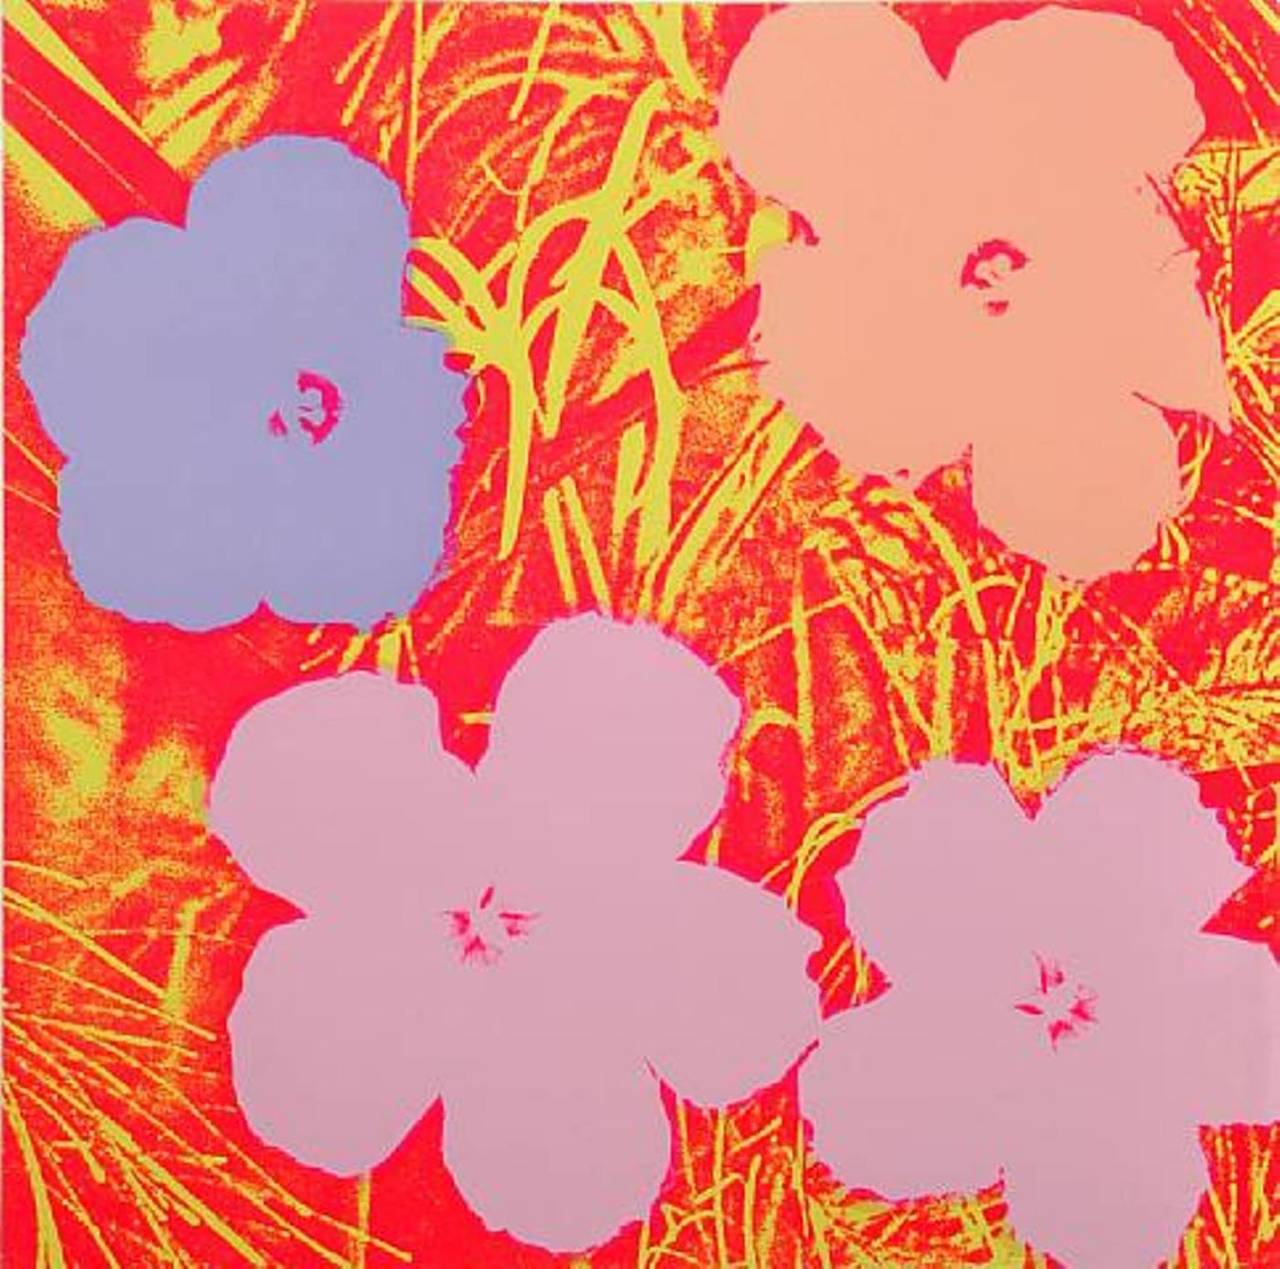 Flowers II.69 - Print by Andy Warhol